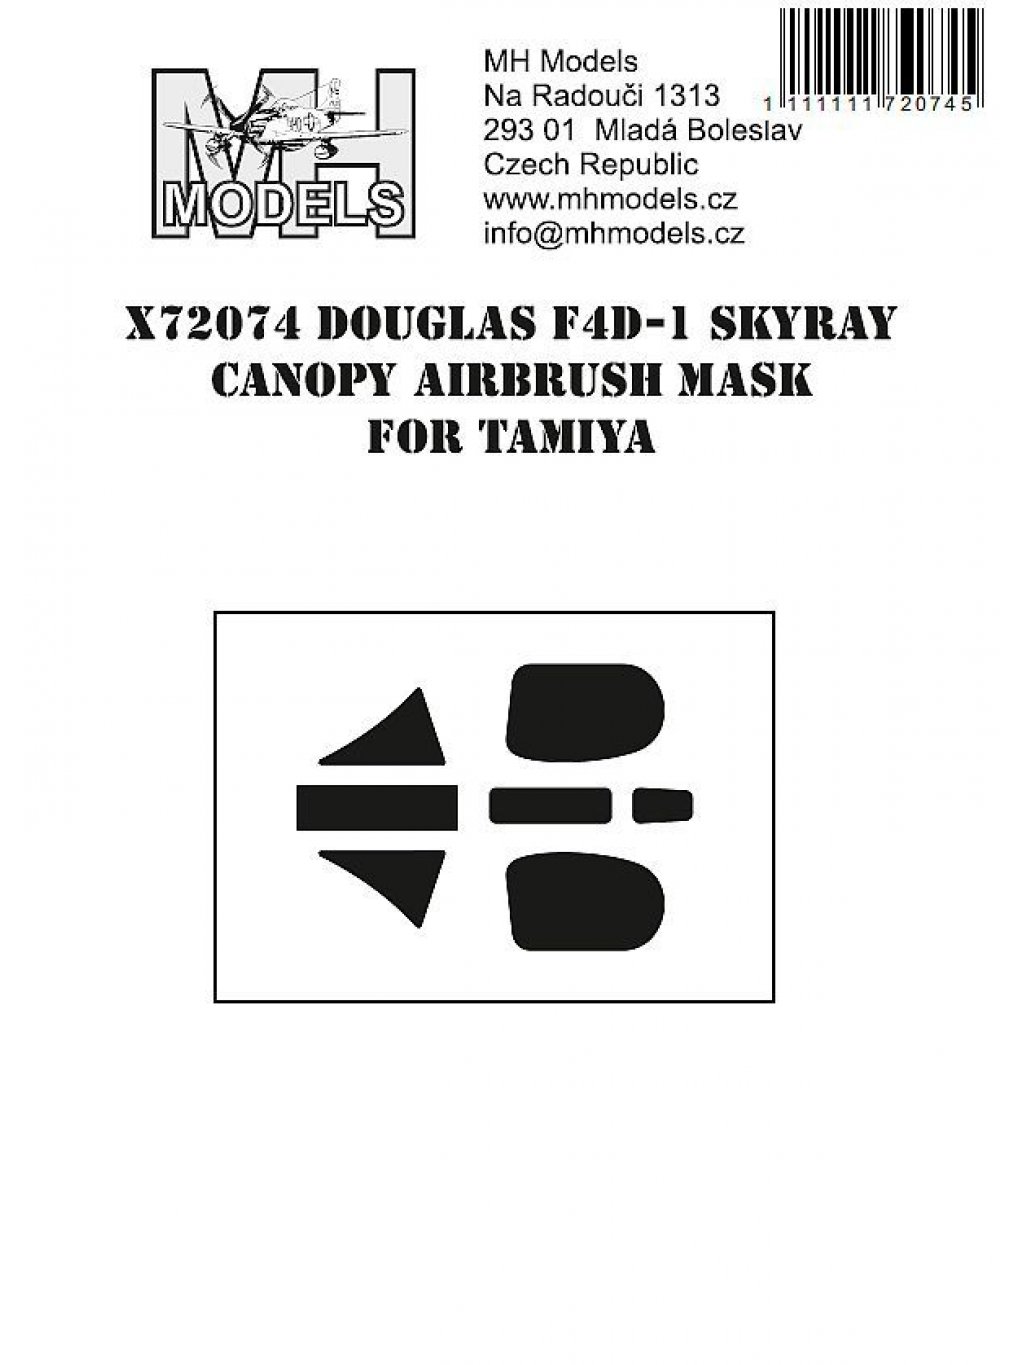 Douglas F4D-1 Skyray canopy airbrush mask for Tamiya